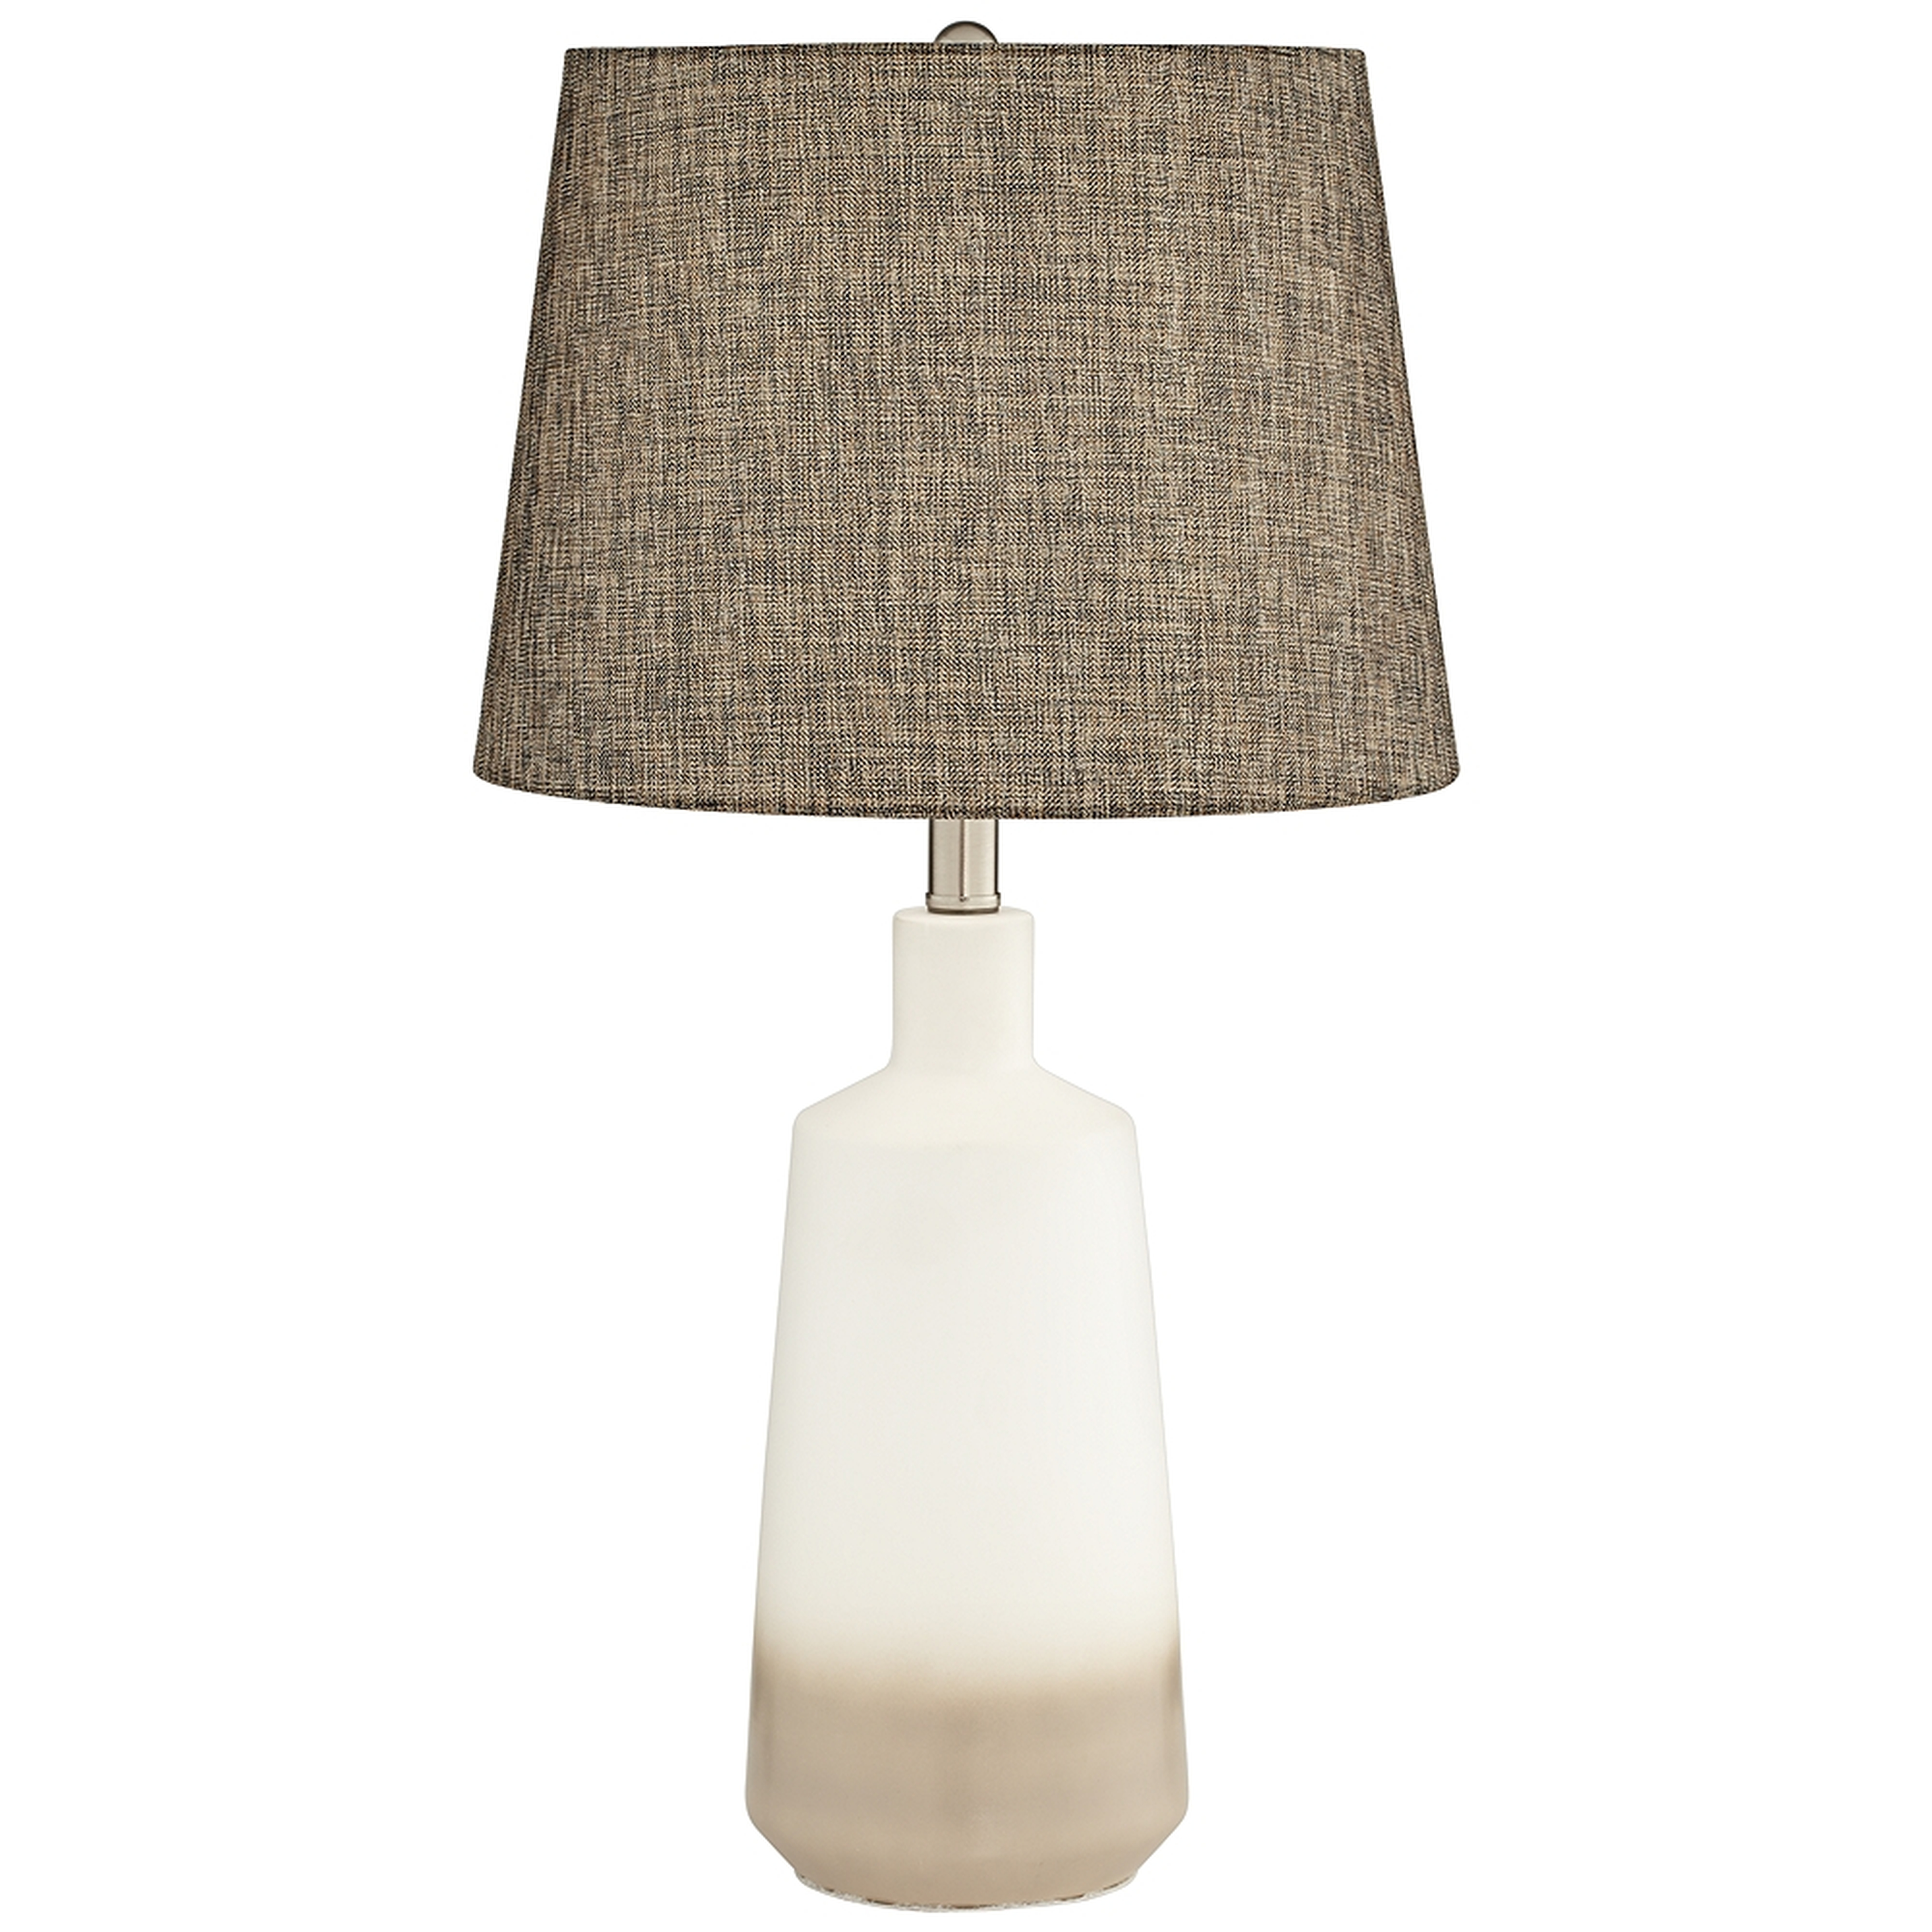 Harlow Modern Farmhouse Ceramic Table Lamp - Style # 94R39 - Lamps Plus